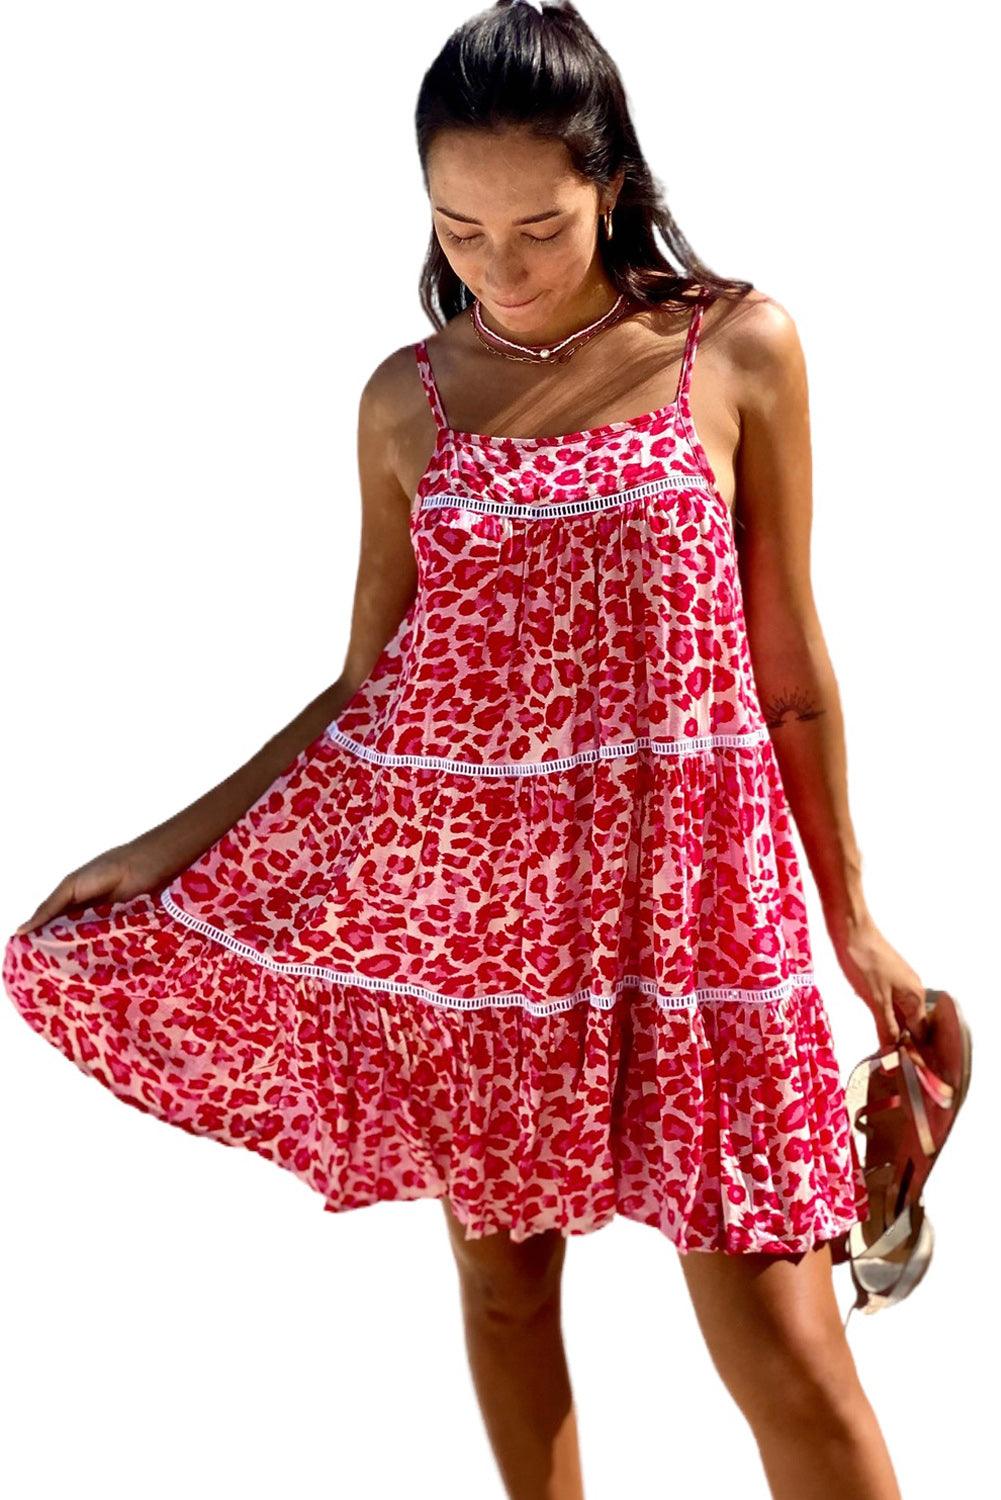 Rose Leopard Print Lace Trim Flared Sundress - L & M Kee, LLC